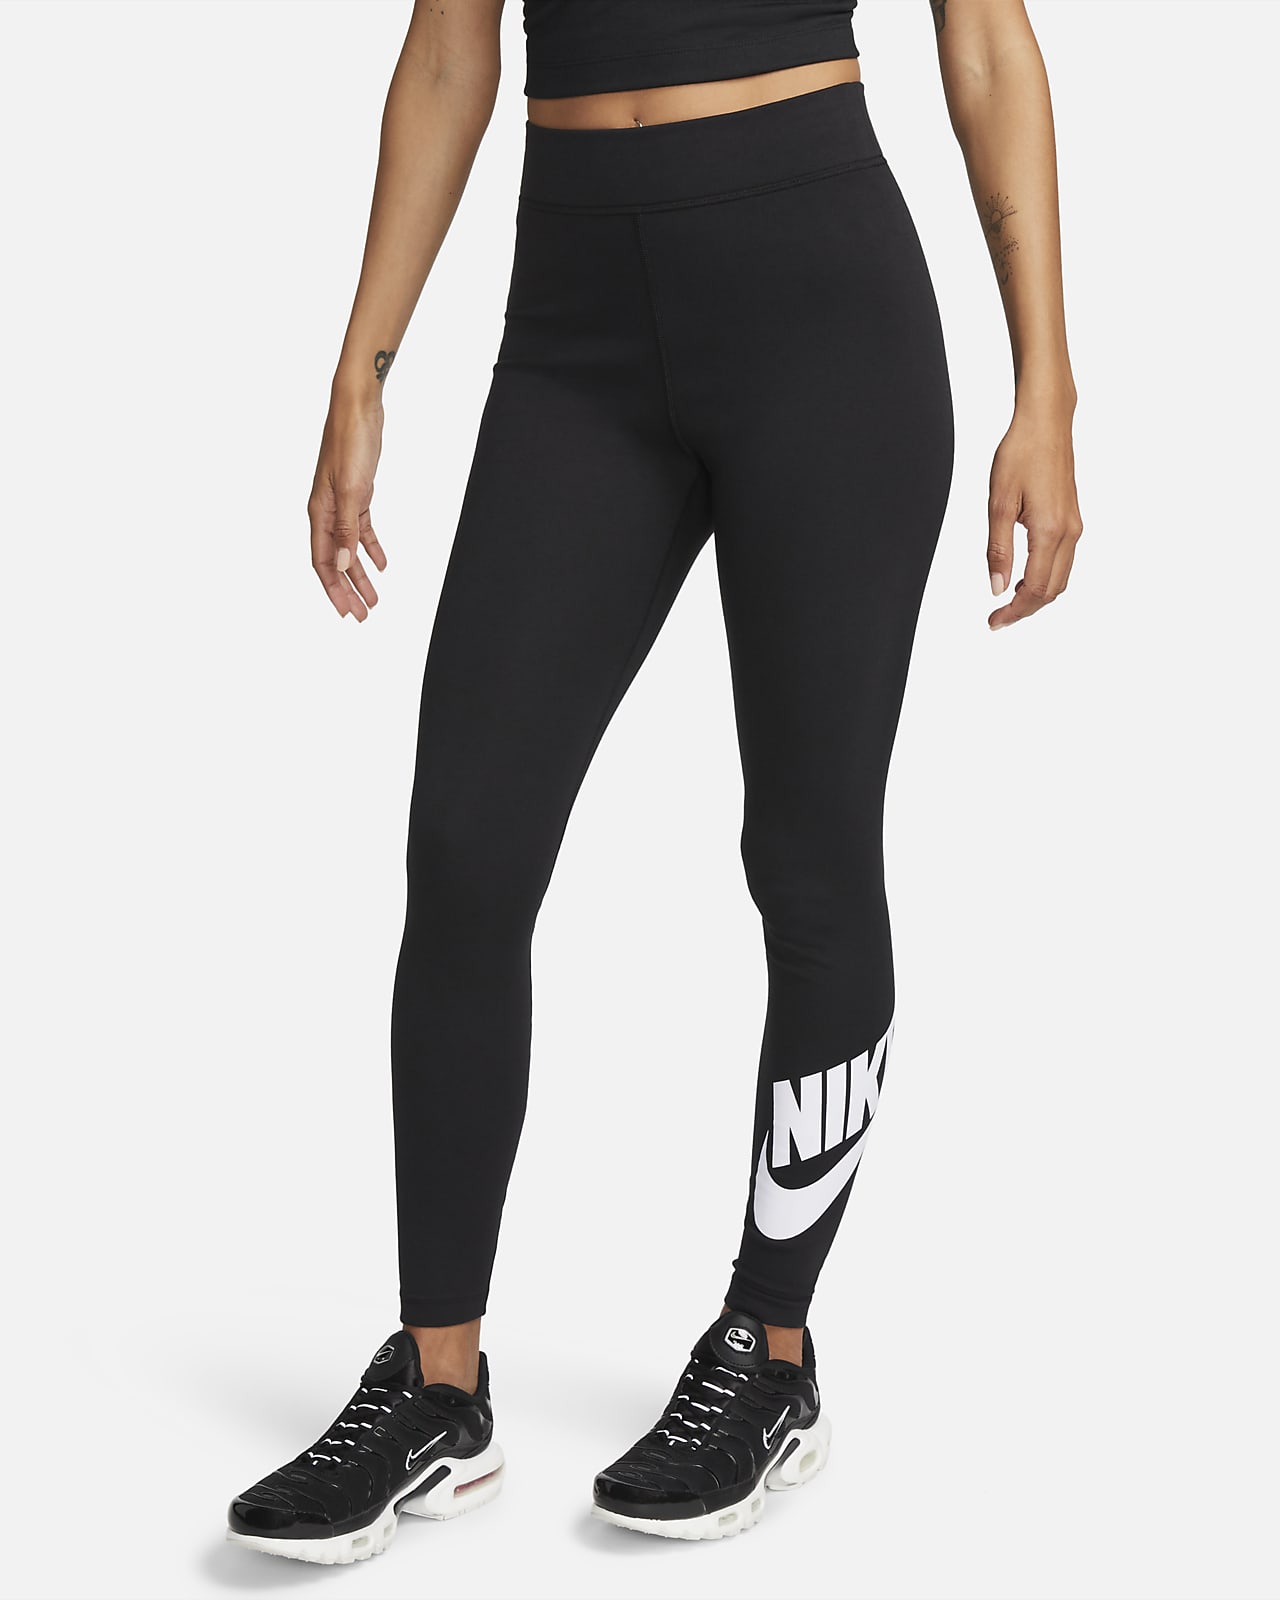 Nike Sportswear Classics Women's High-Waisted Graphic Leggings. Nike NL